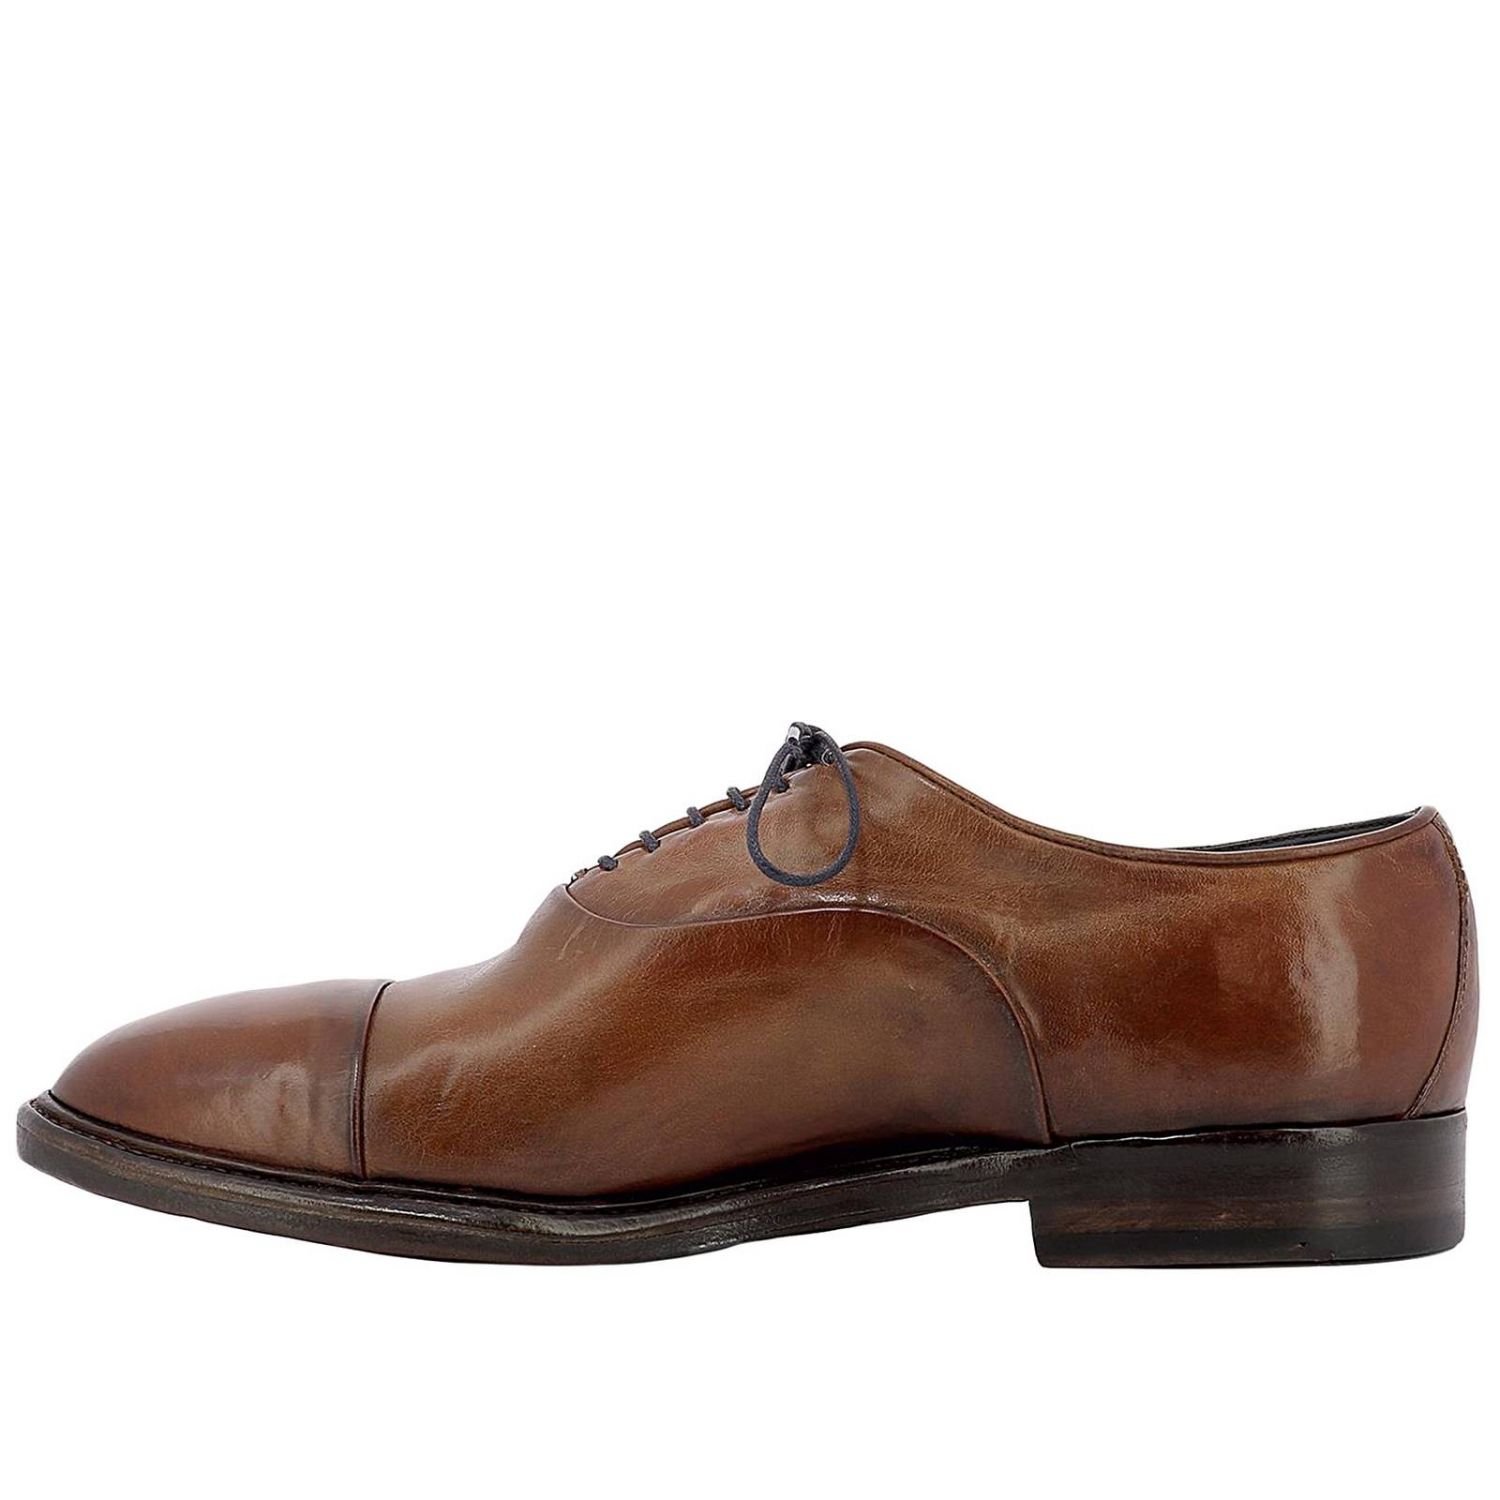 Alberto Fasciani Outlet: Brogue shoes men - Brown | Brogue Shoes ...